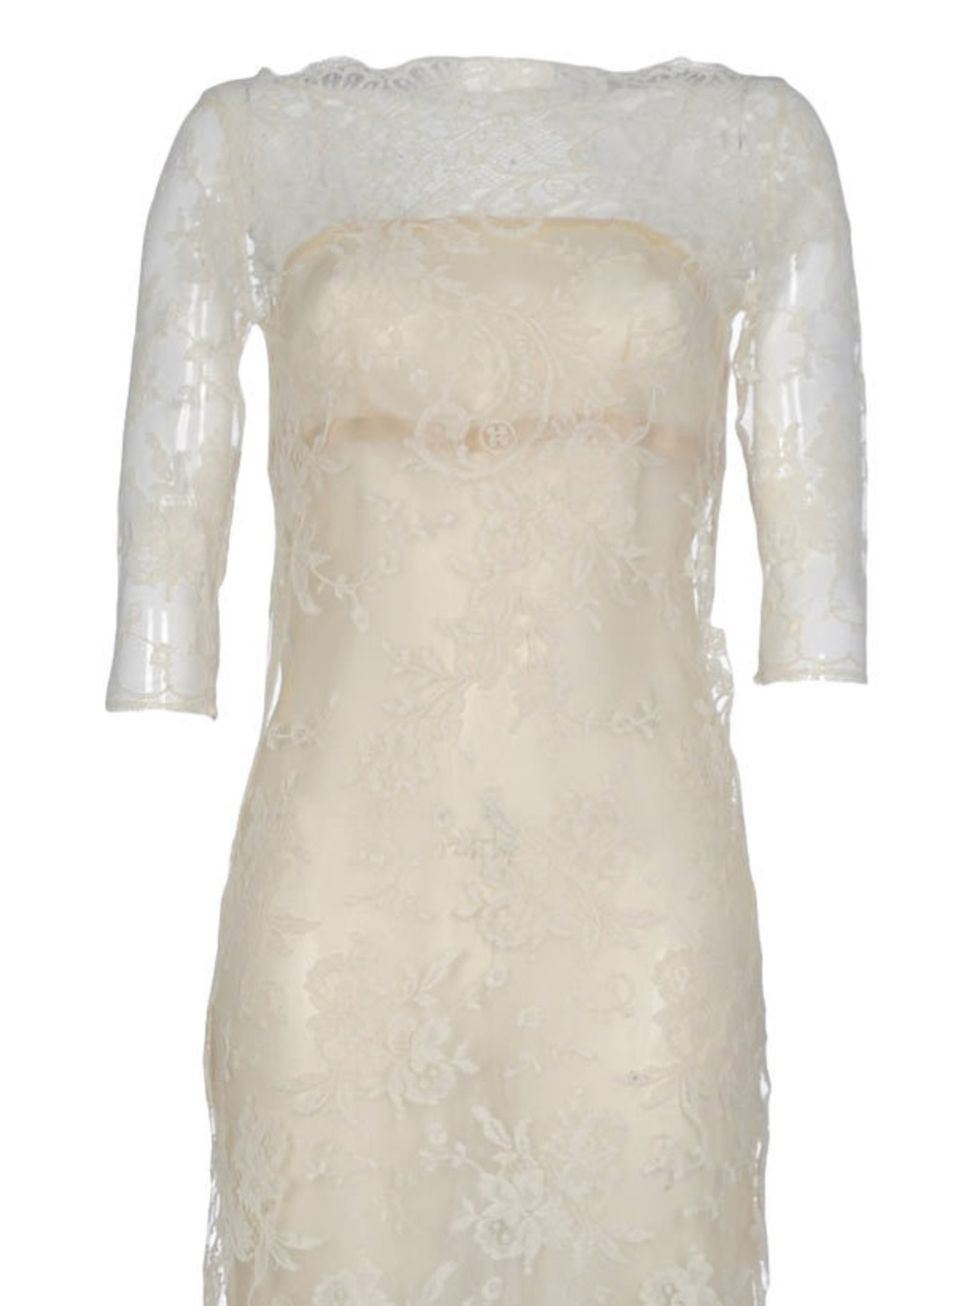 <p>Charles Anastase lace dress, £680, at <a href="http://www.thecorner.com/item/YOOX/CHARLES+ANASTASE/dept/tcwoman/tskay/582B0E9B/rr/1/cod10/34198312RC/sts/sr_tcwoman3">thecorner.com</a></p>